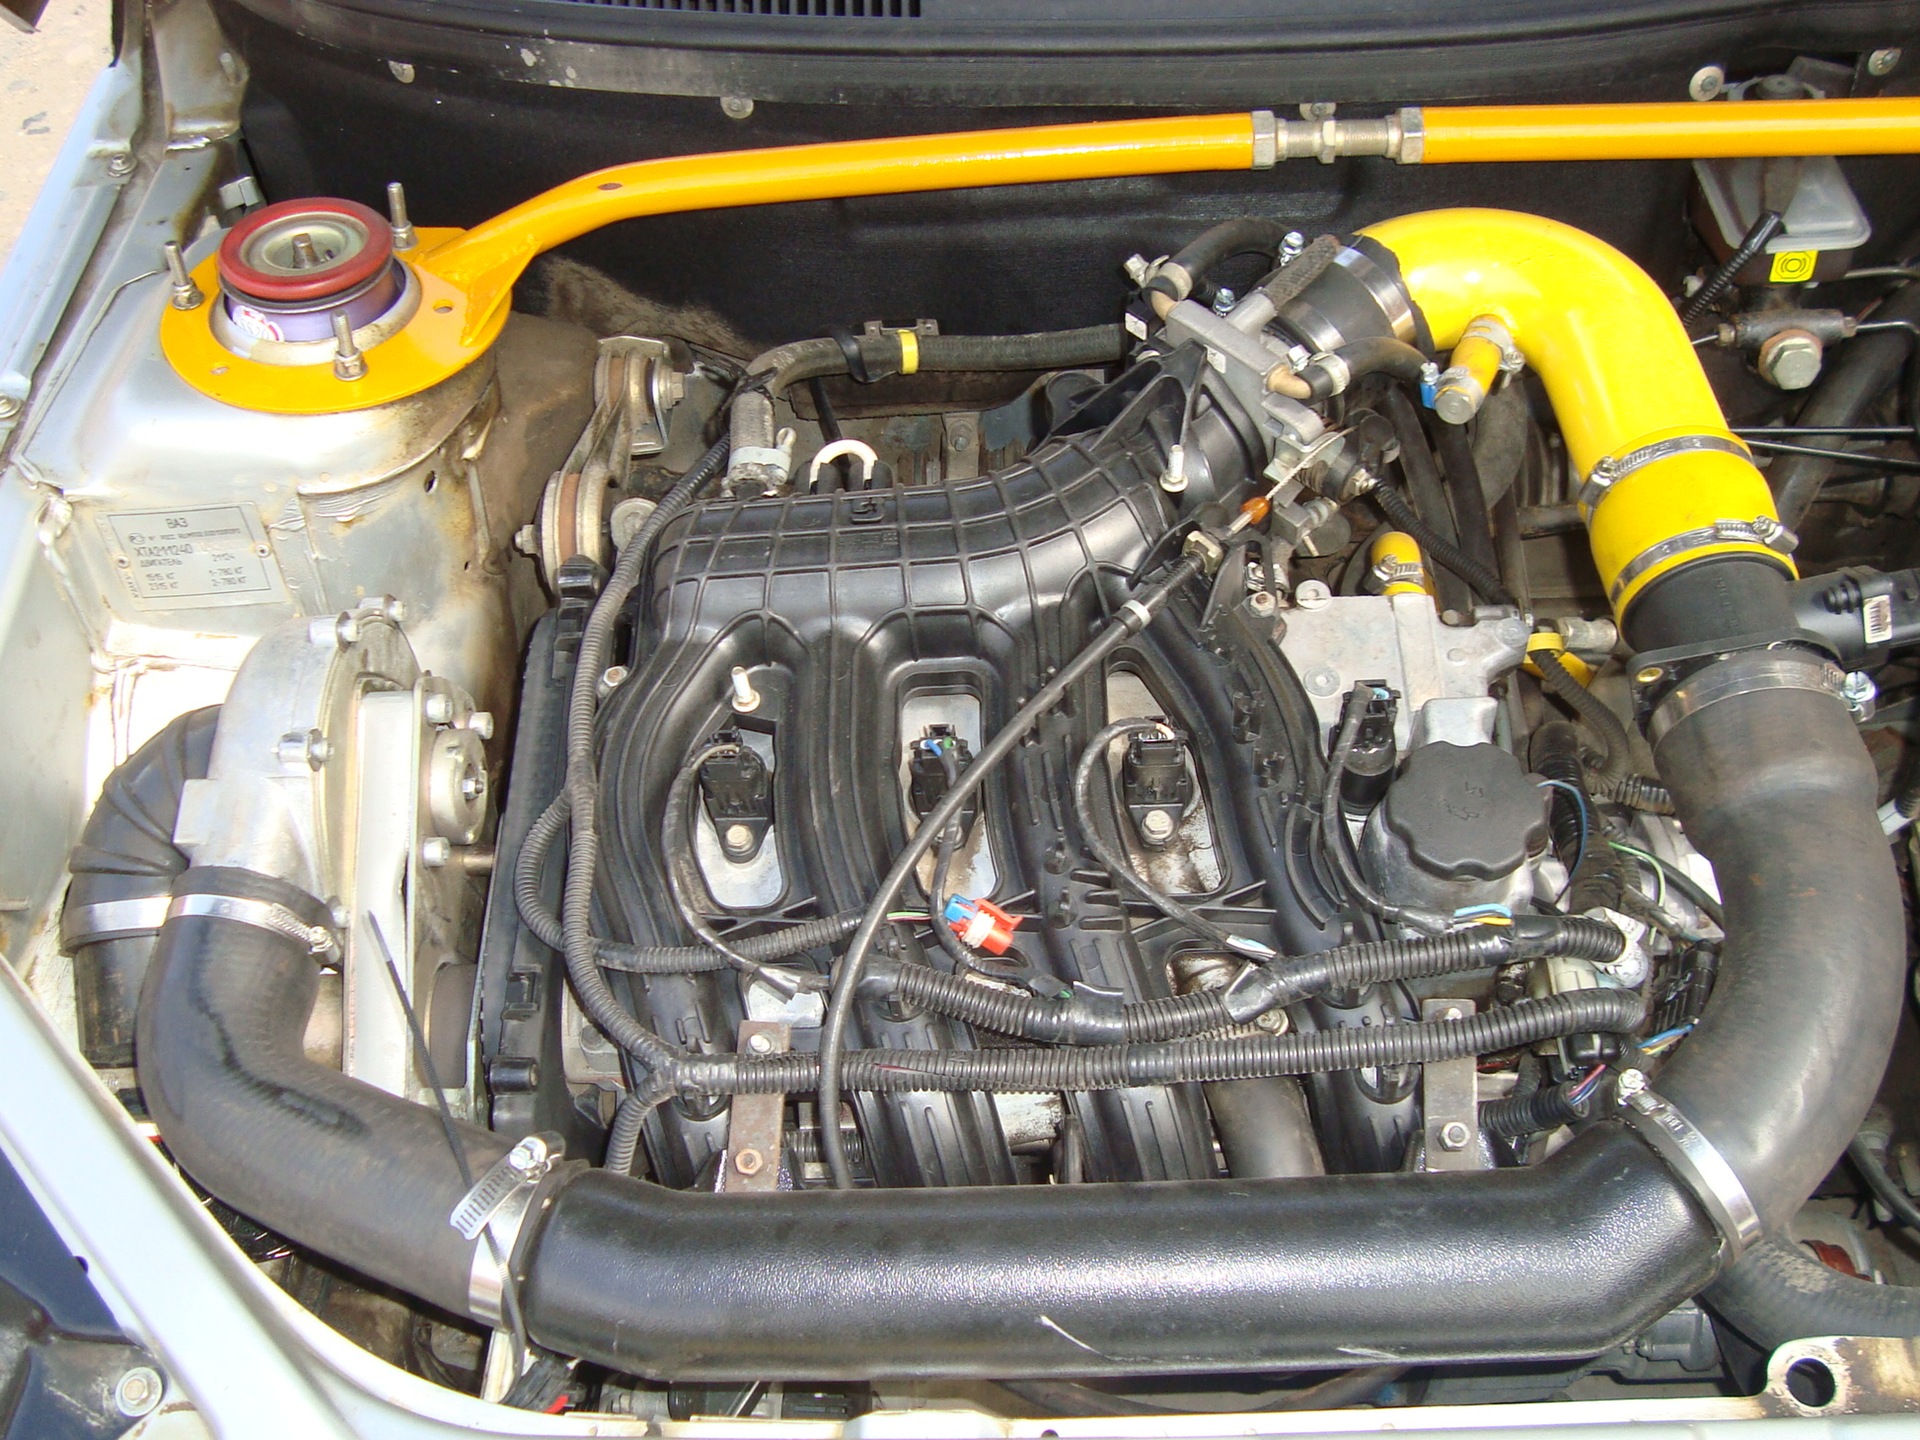 Шестнадцати клапанный двигатель. Турбо мотор ВАЗ 16кл. Компрессор на ВАЗ 2110 16кл. ВАЗ 2114 16 клапанная турбо. Турбо ВАЗ 2112 16 клапанов.